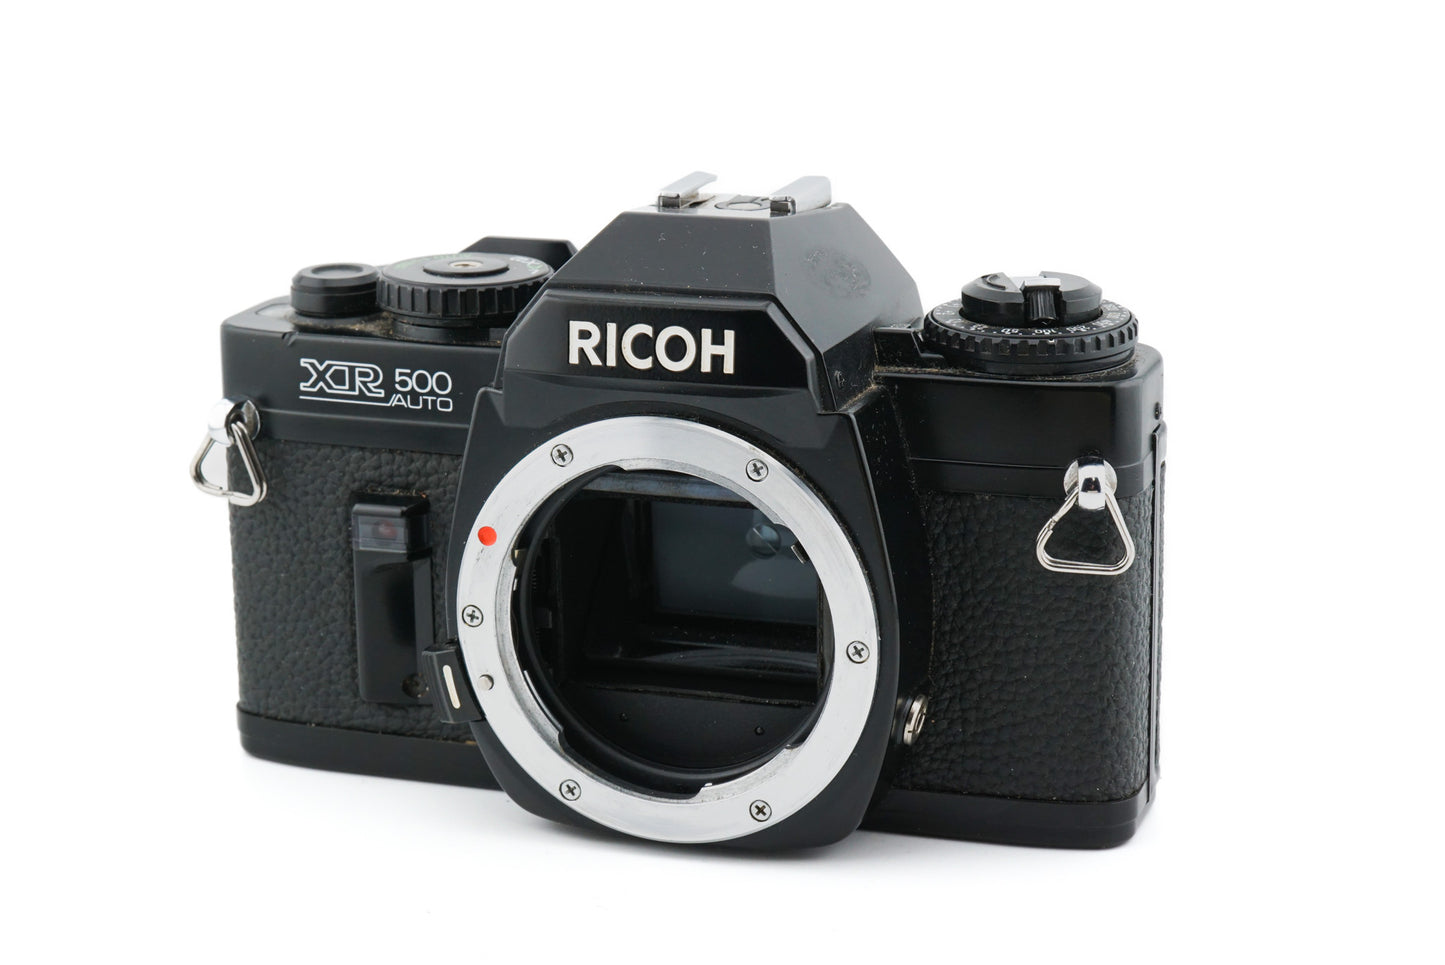 Ricoh XR500 Auto - Camera